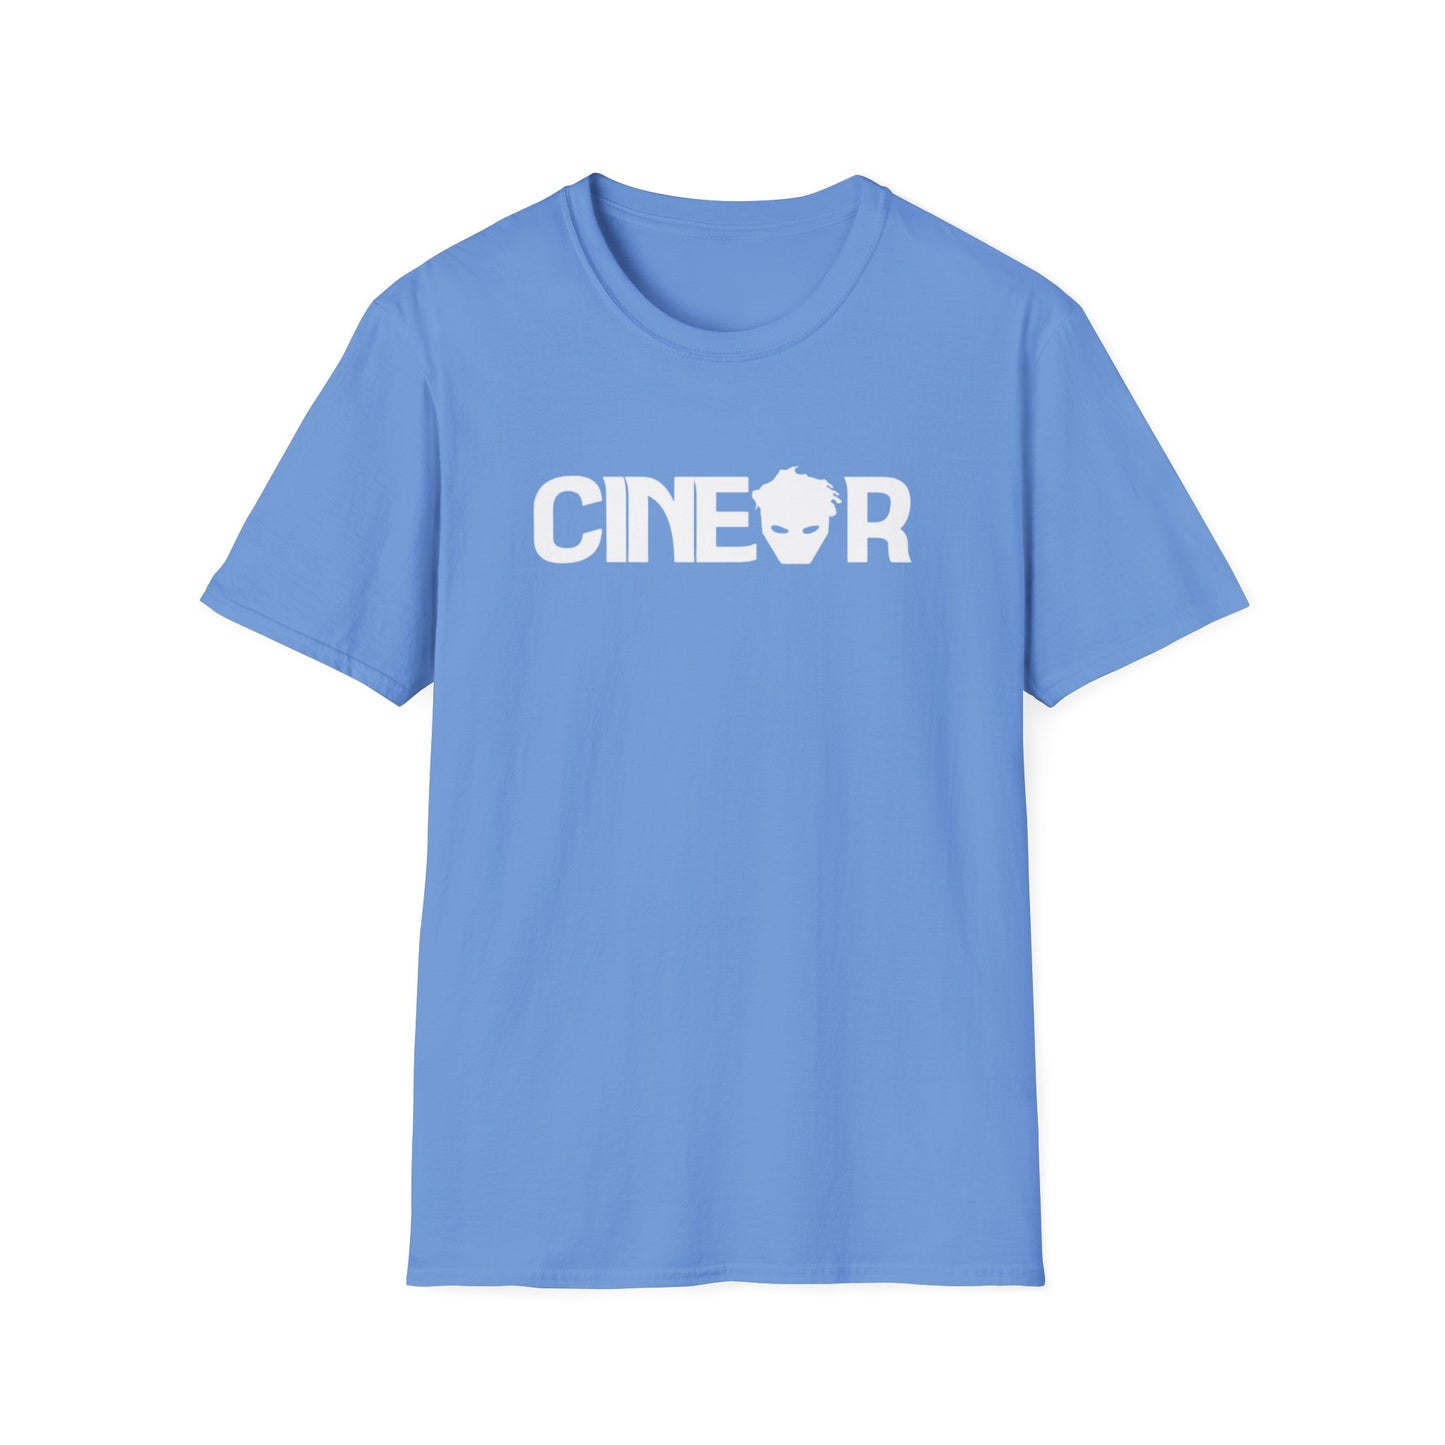 Cineor crystal blue